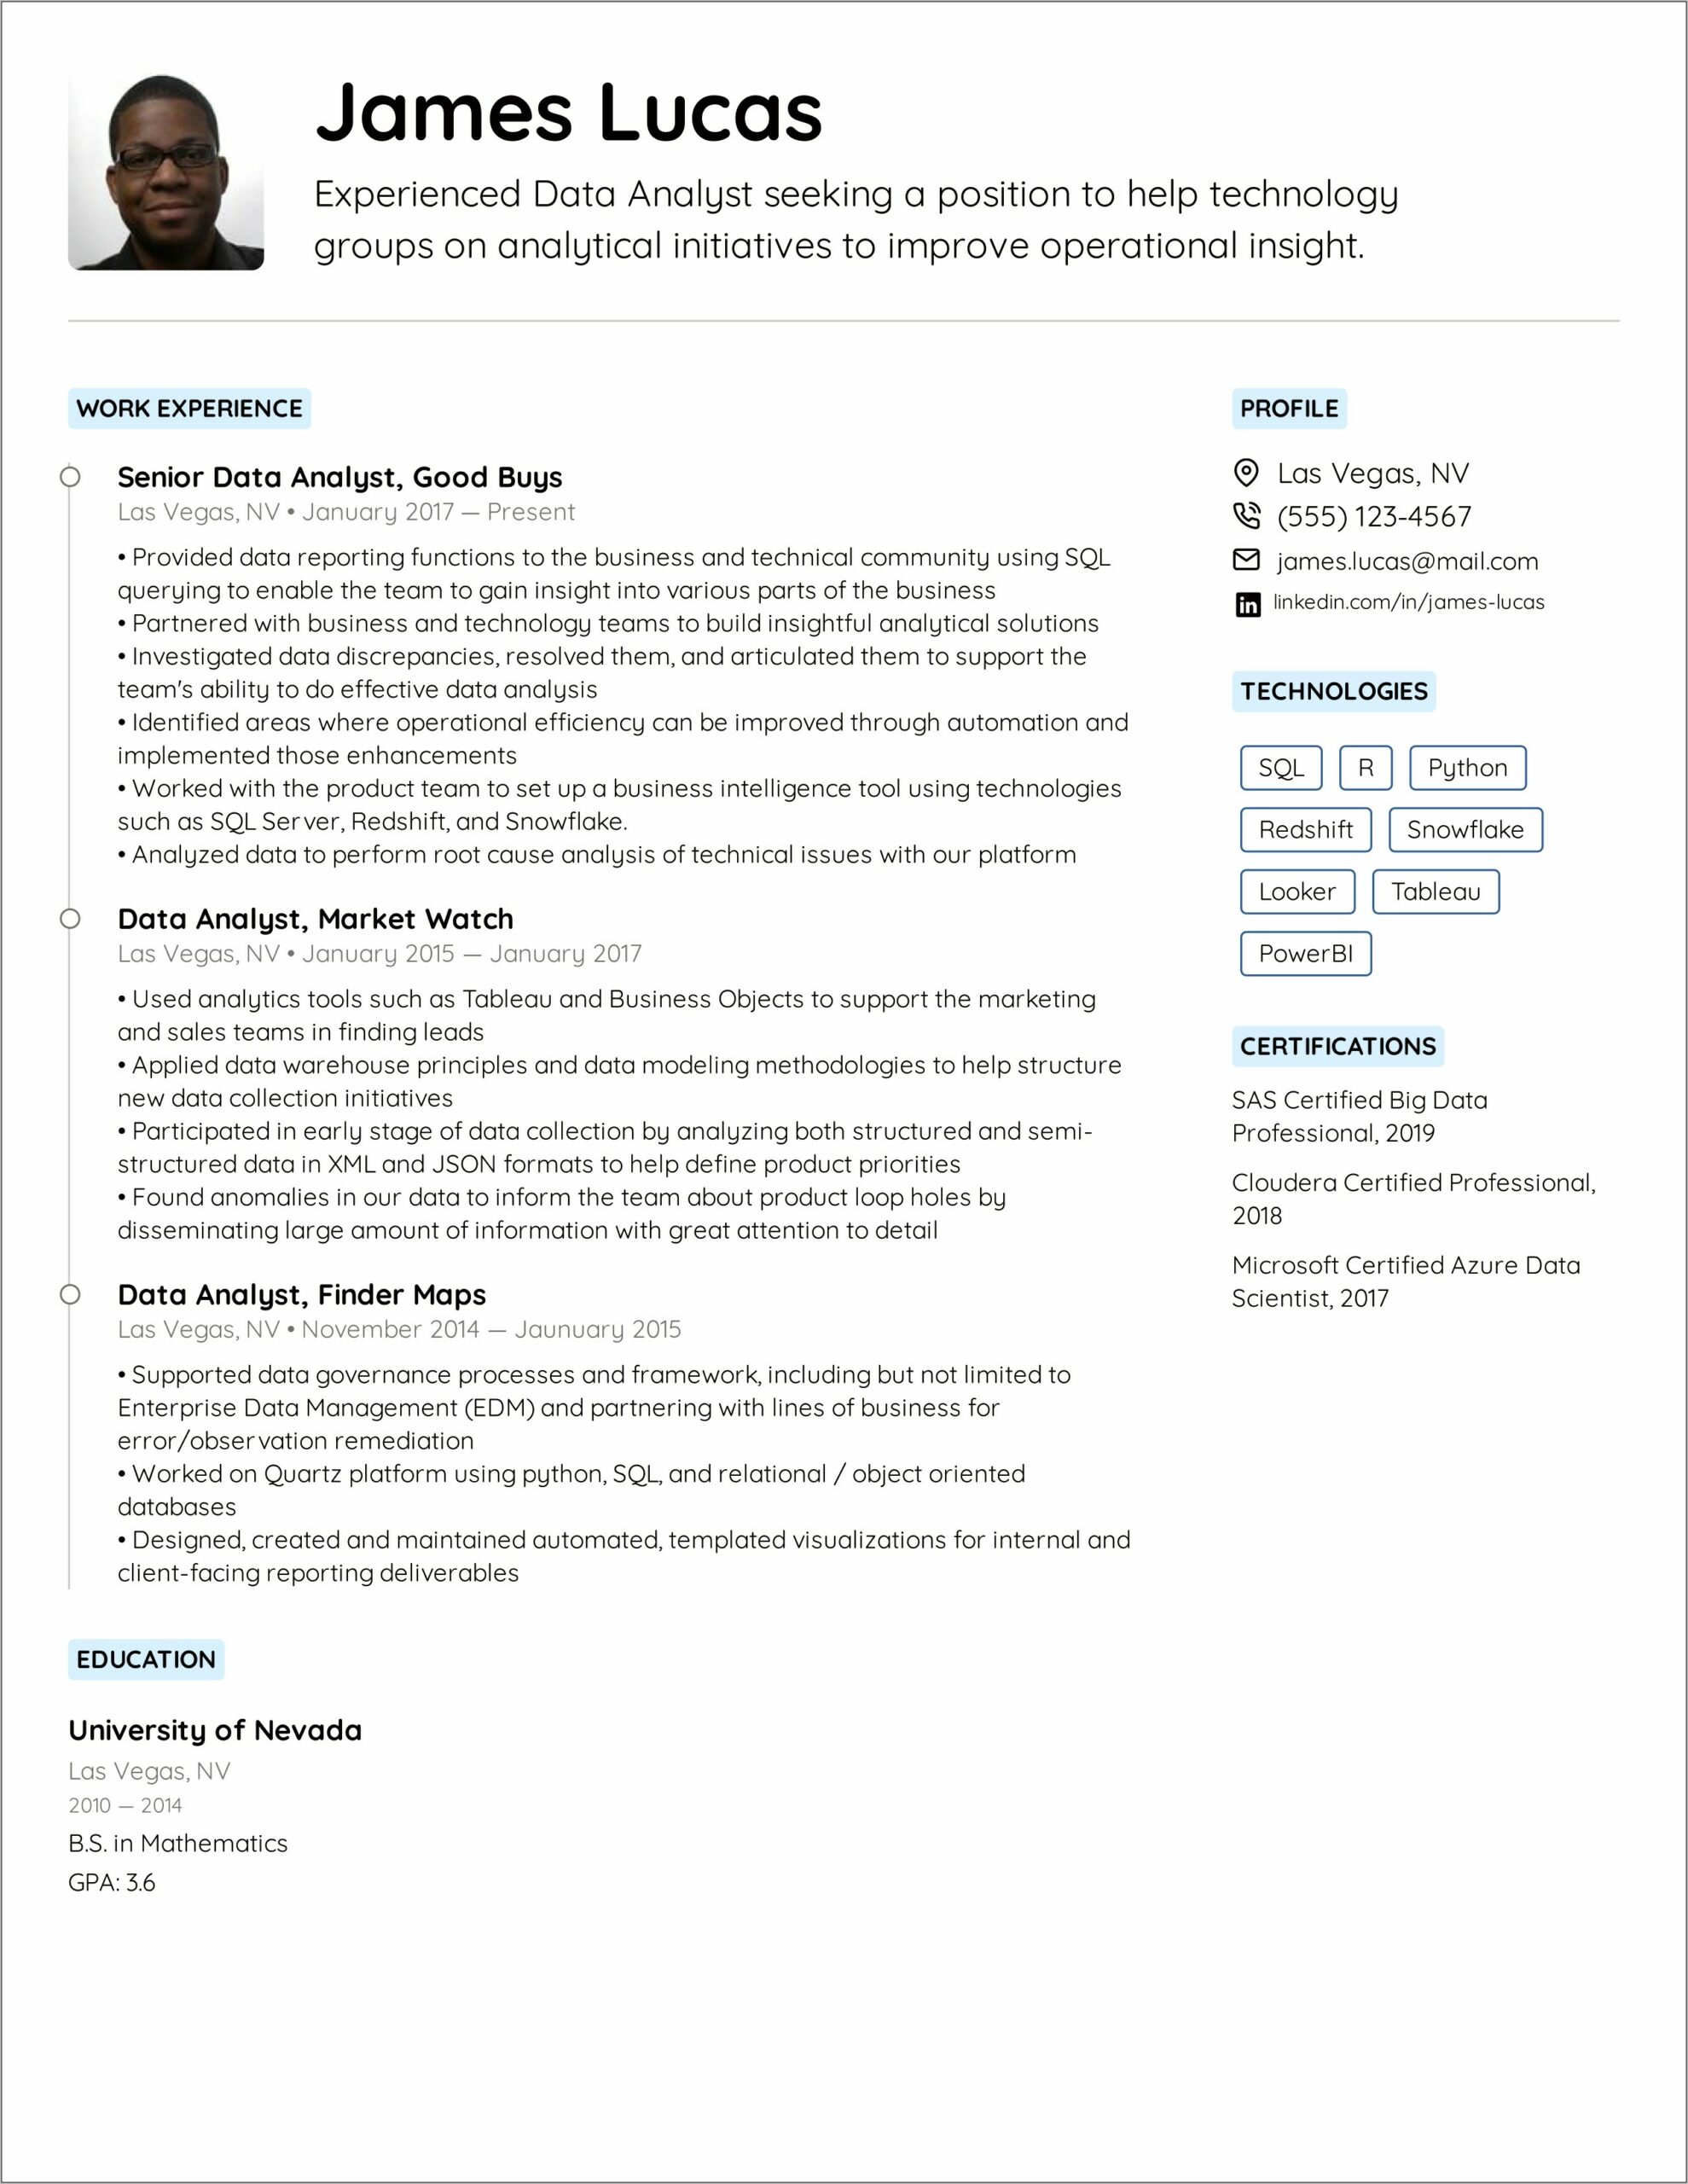 Resume Objective Statement Data Analyst